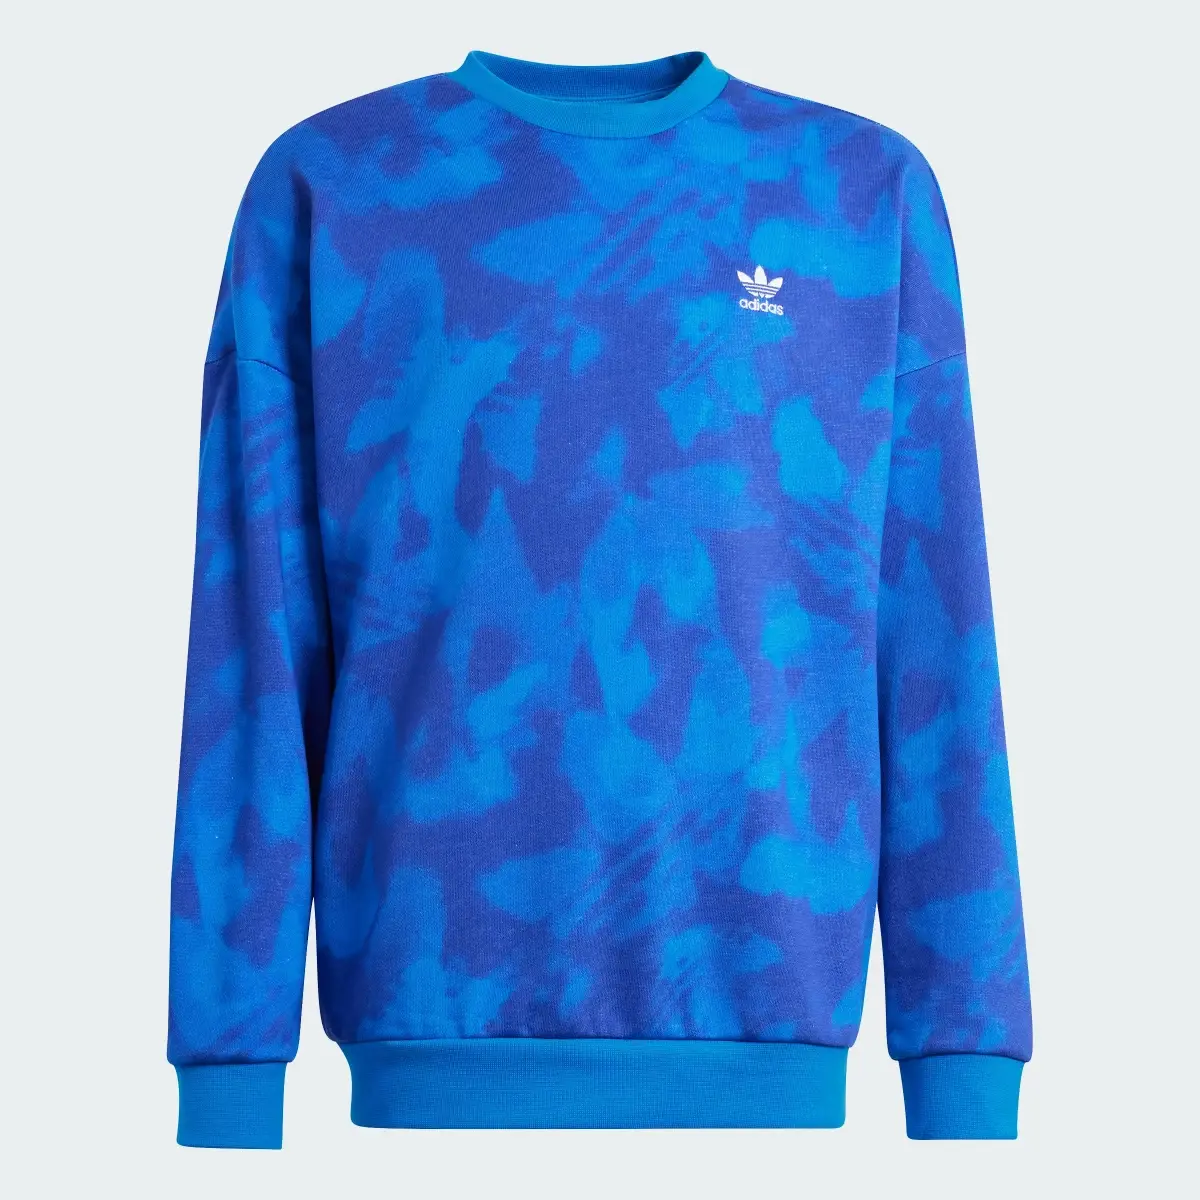 Adidas Summer Allover Print Crew Sweatshirt. 1